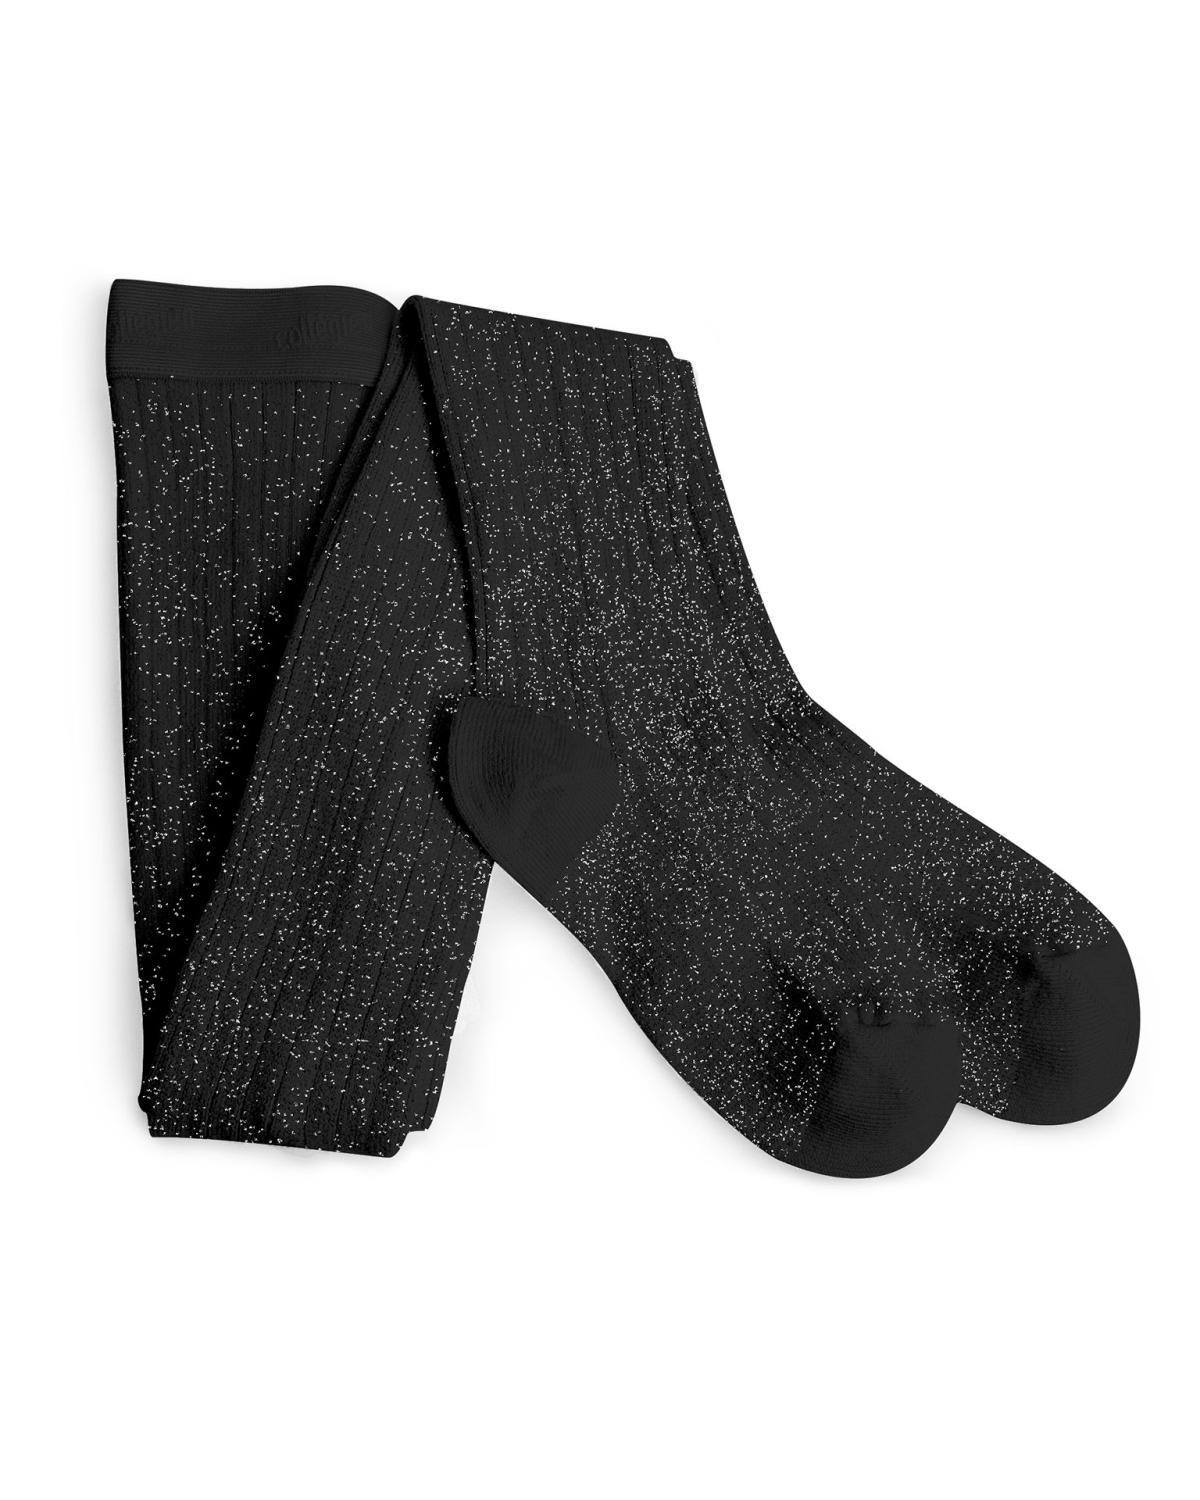 Little collegien accessories 0/3m glittery tights in noir charbon